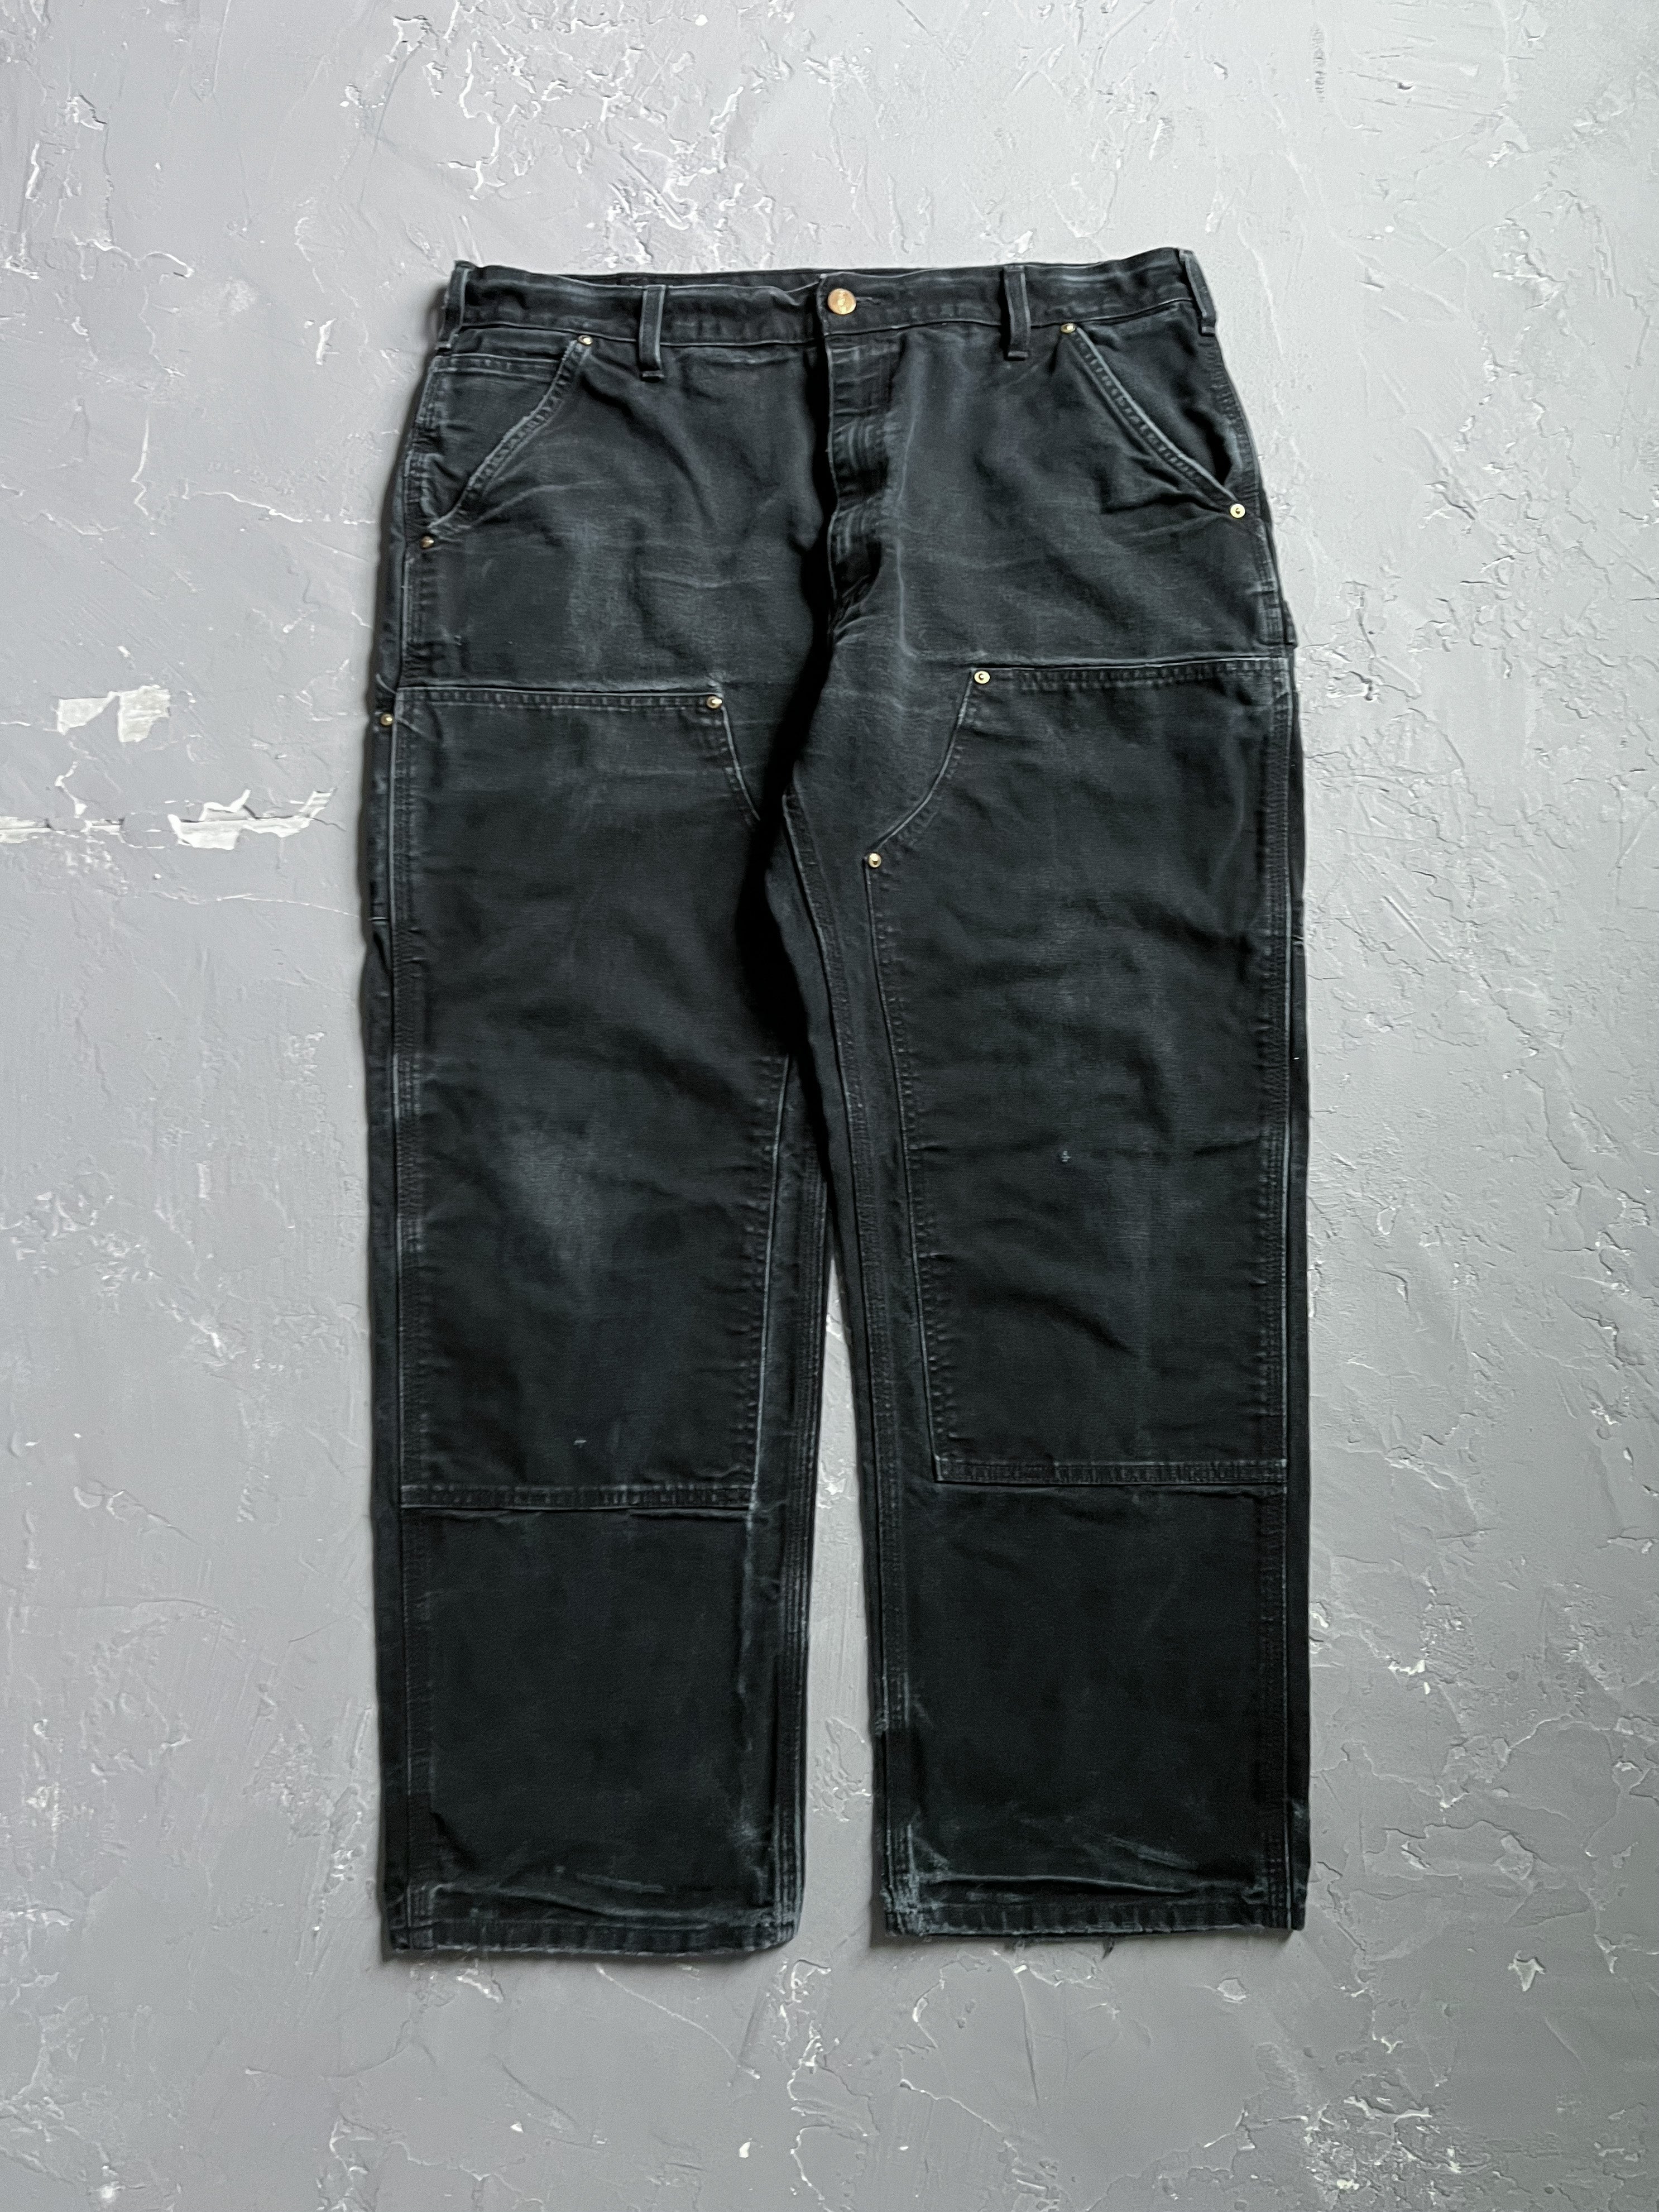 Carhartt Black Double Knee Pants [38 x 30]